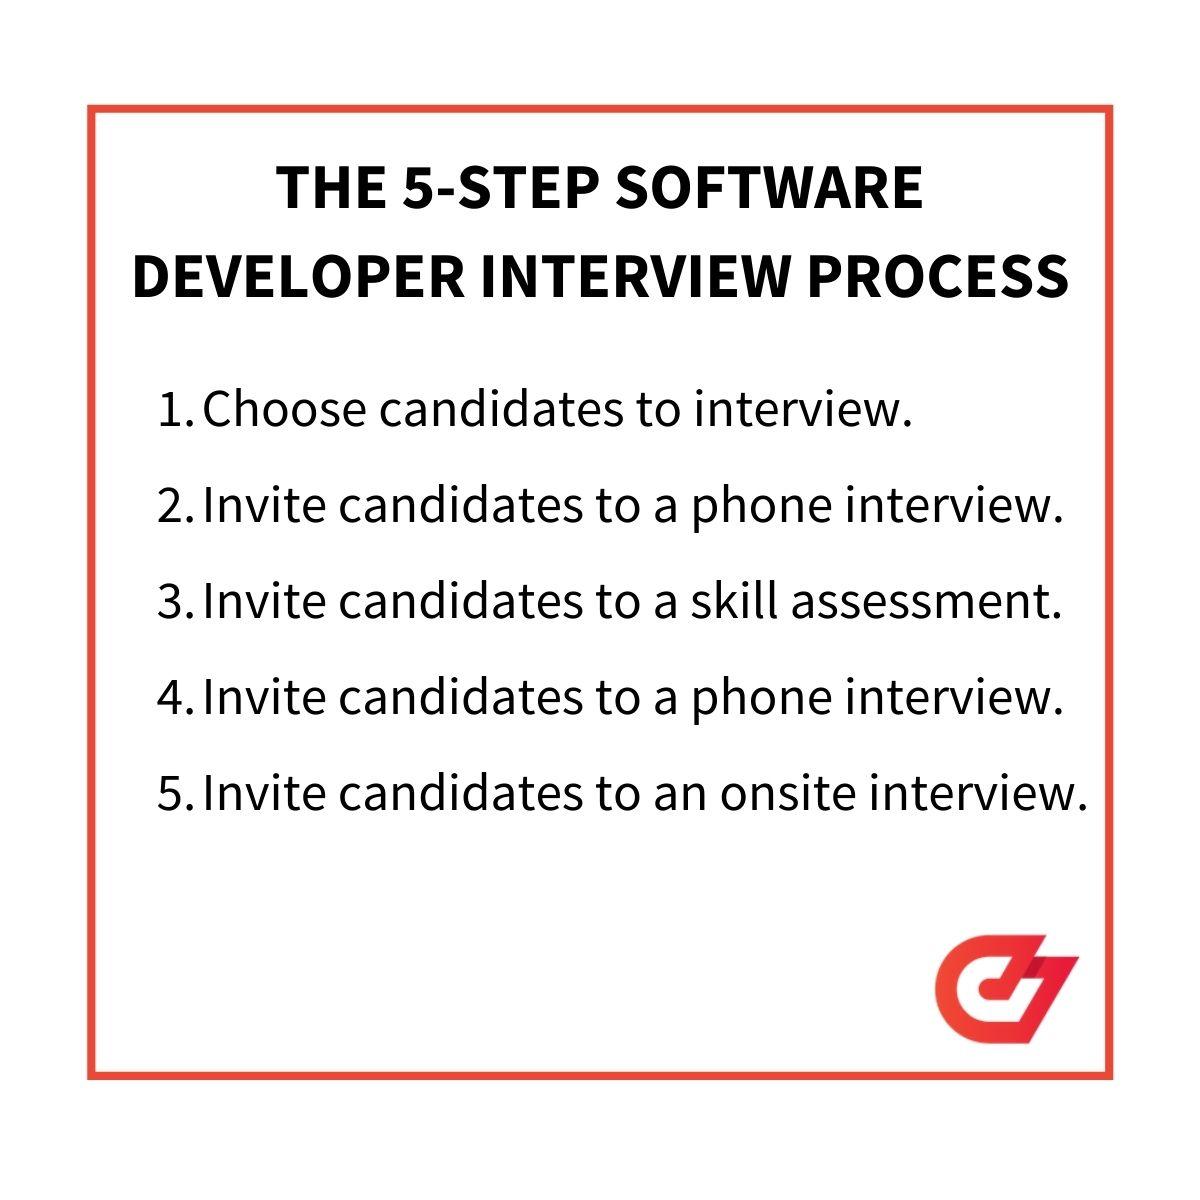 5-step developer interview process